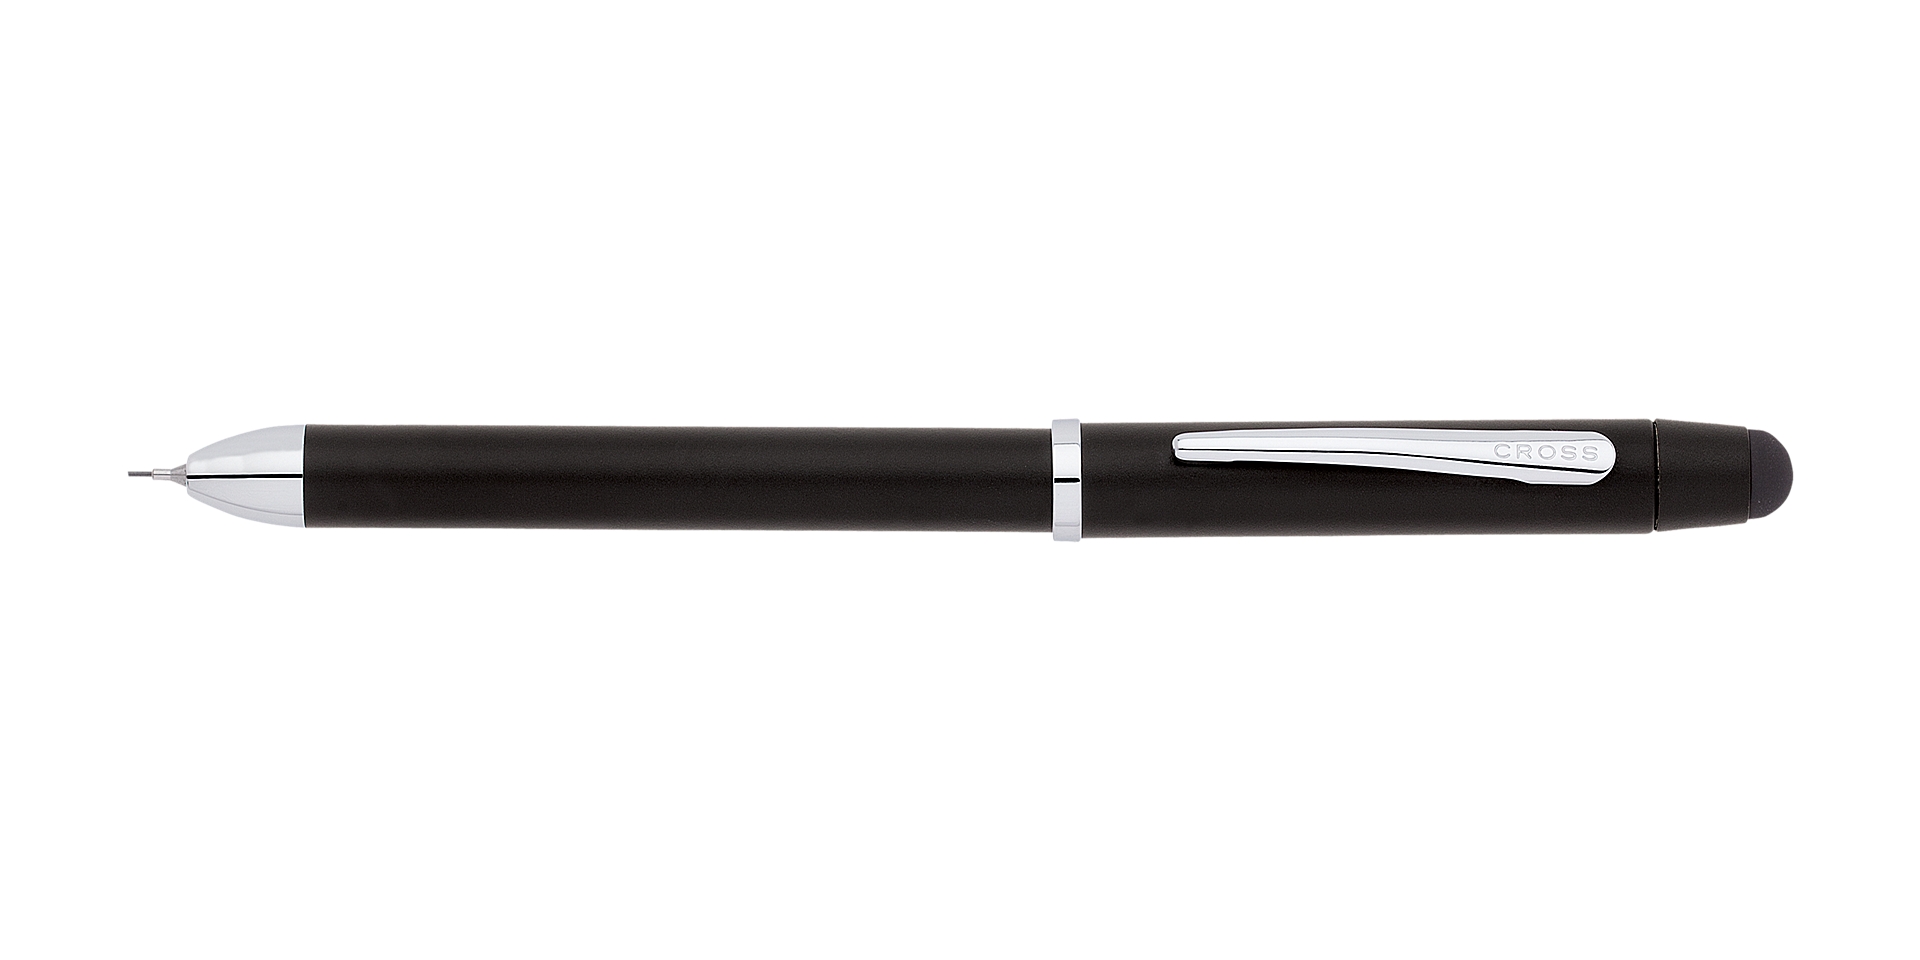  Tech3 Satin Black Multi-Function Pen